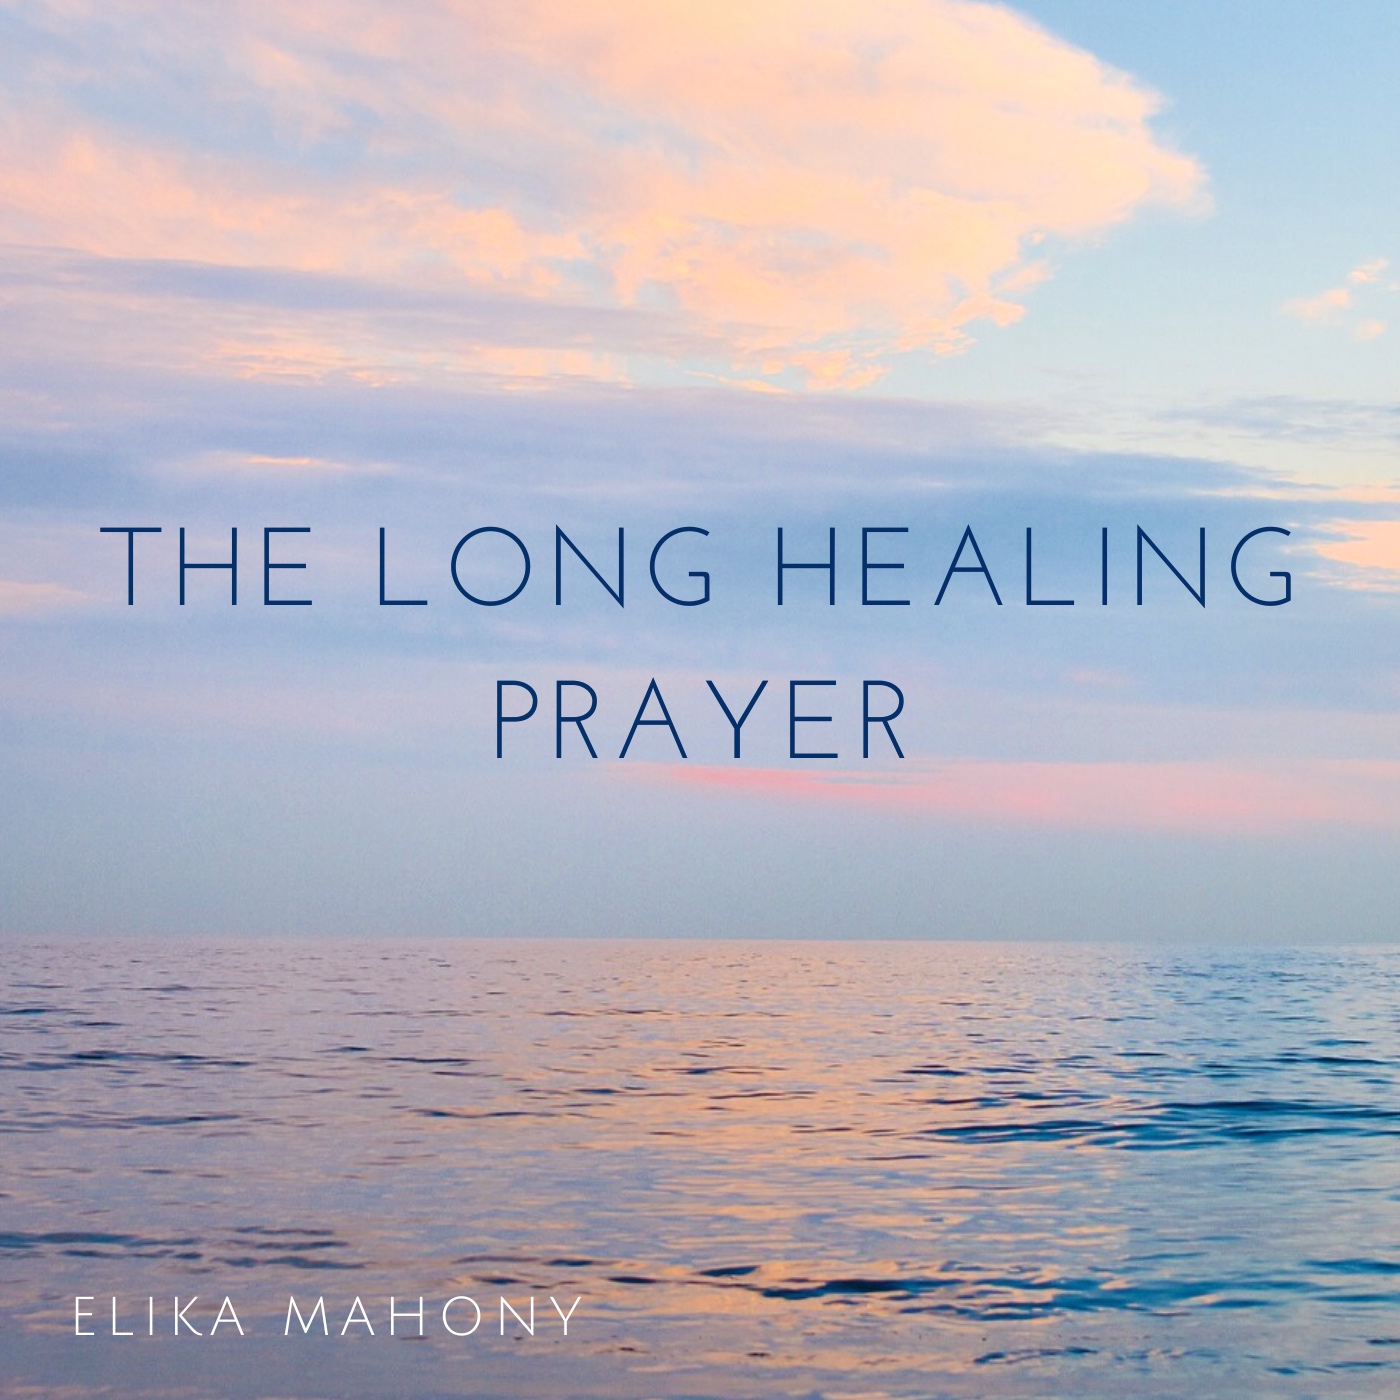 The Long Healing Prayer – finally here